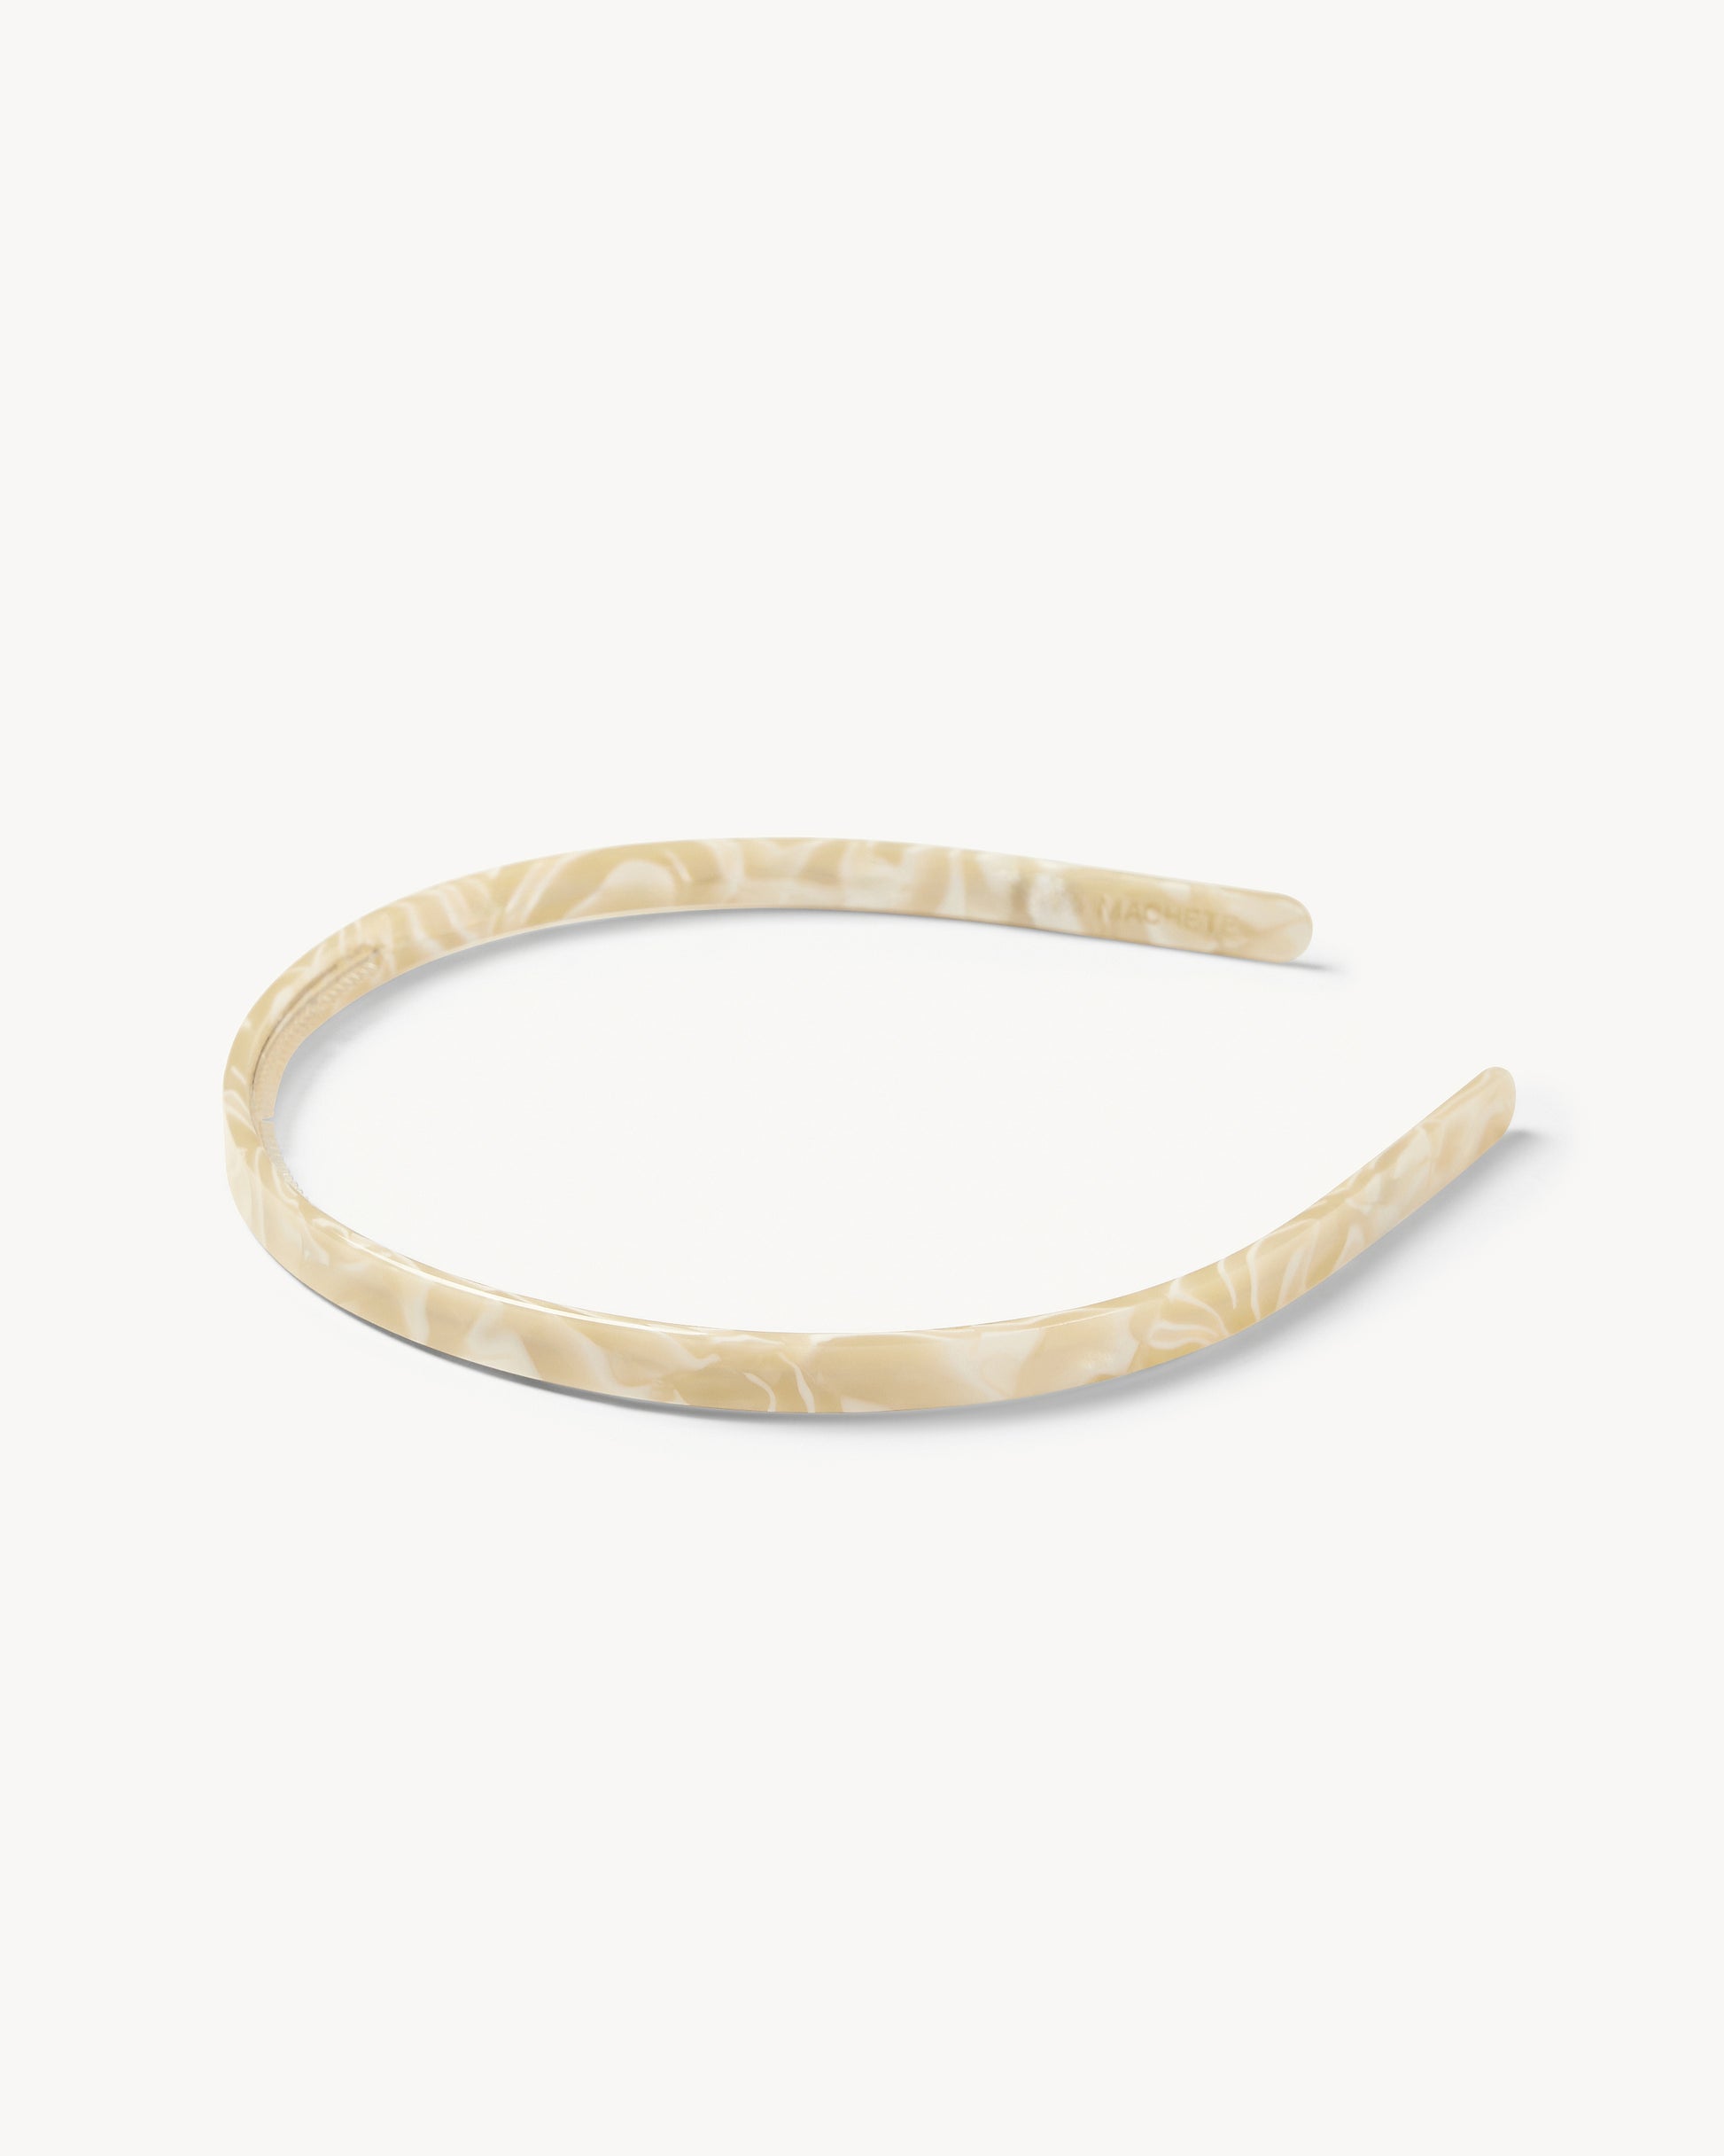 MACHETE Ultralight Thin Headband in Ivory